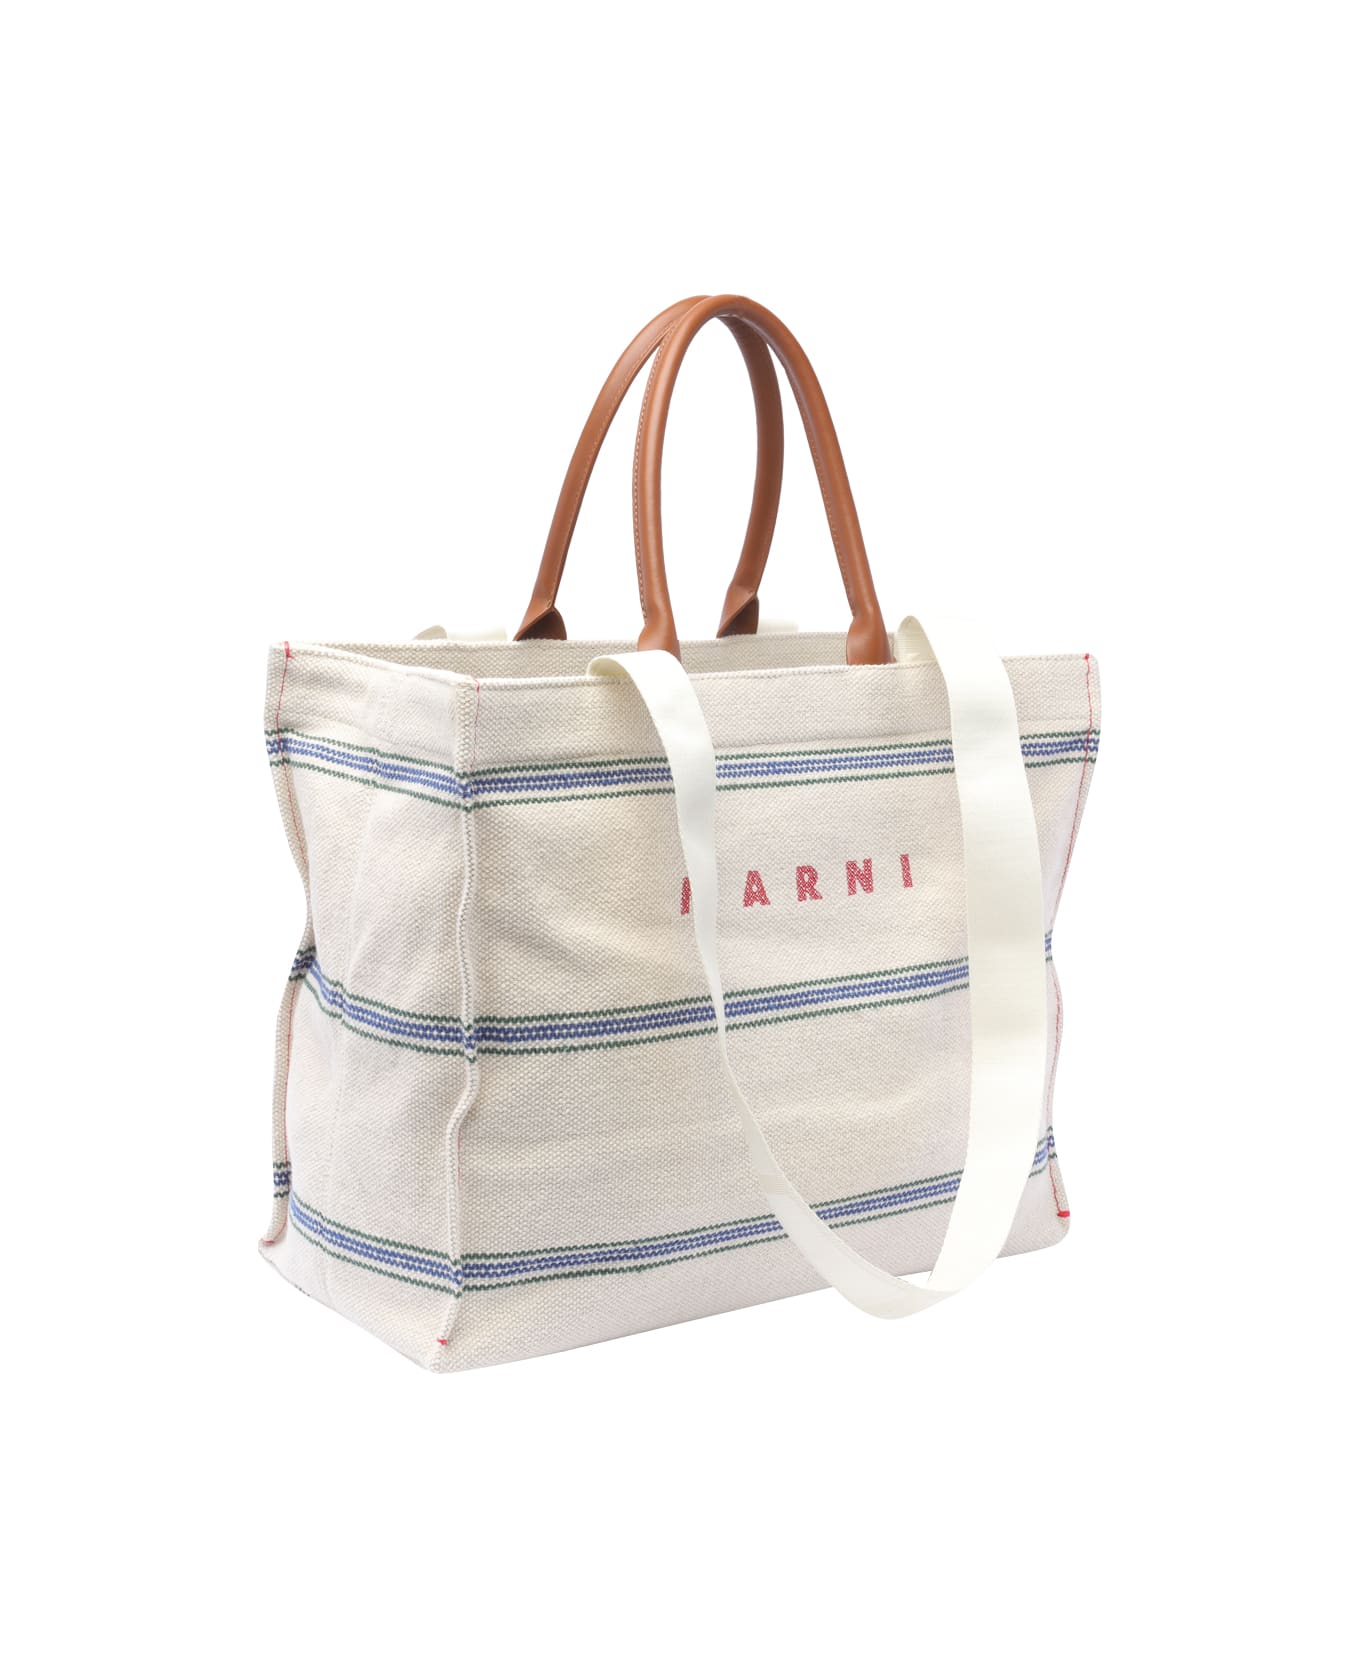 Marni Logo Tote Bag - White